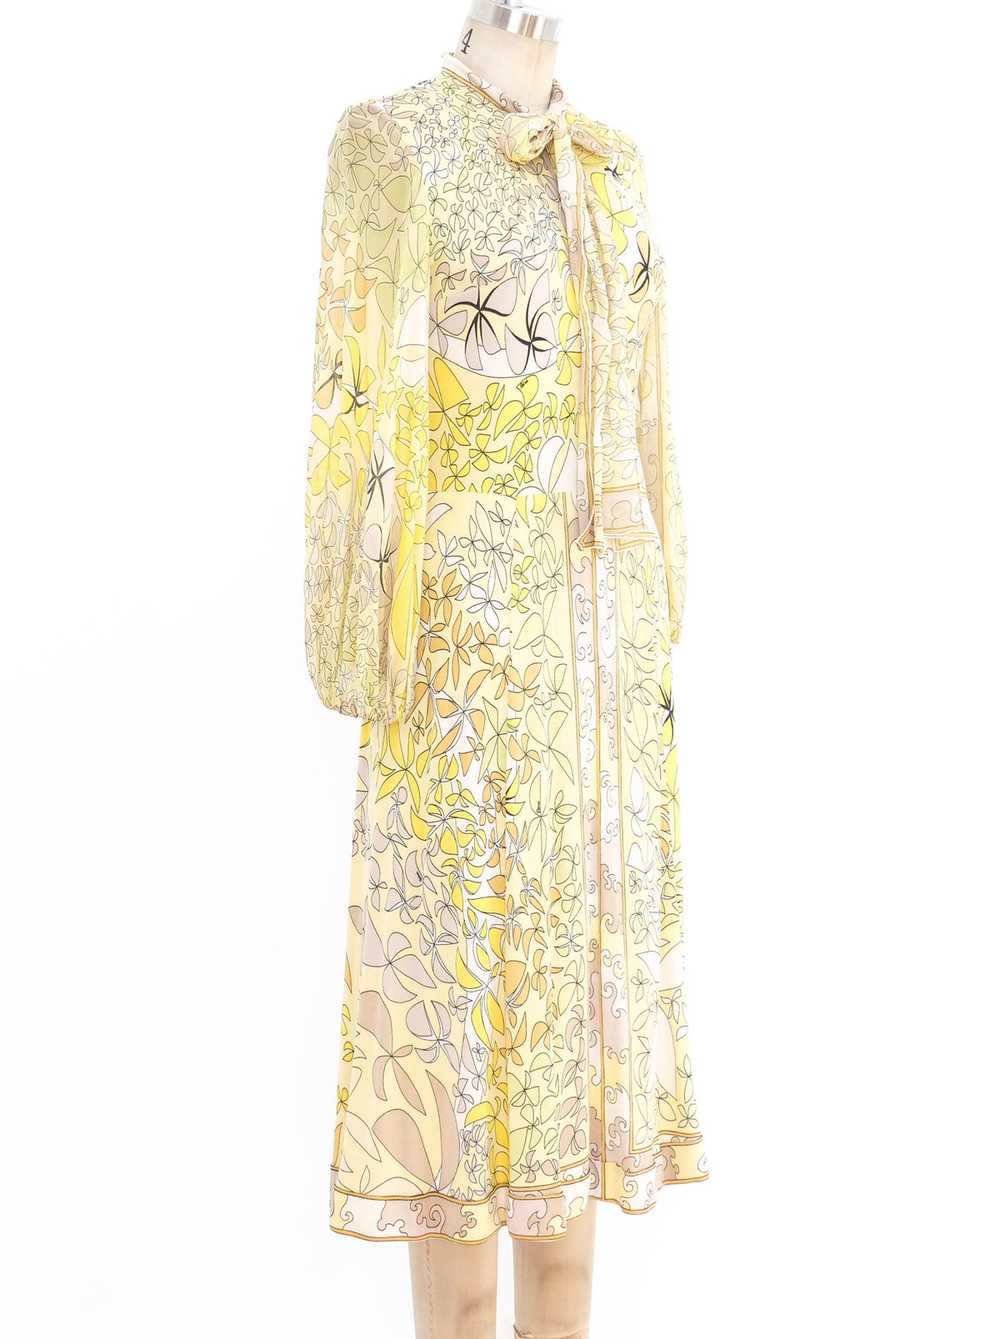 Bessi Printed Silk Jersey Dress - image 3